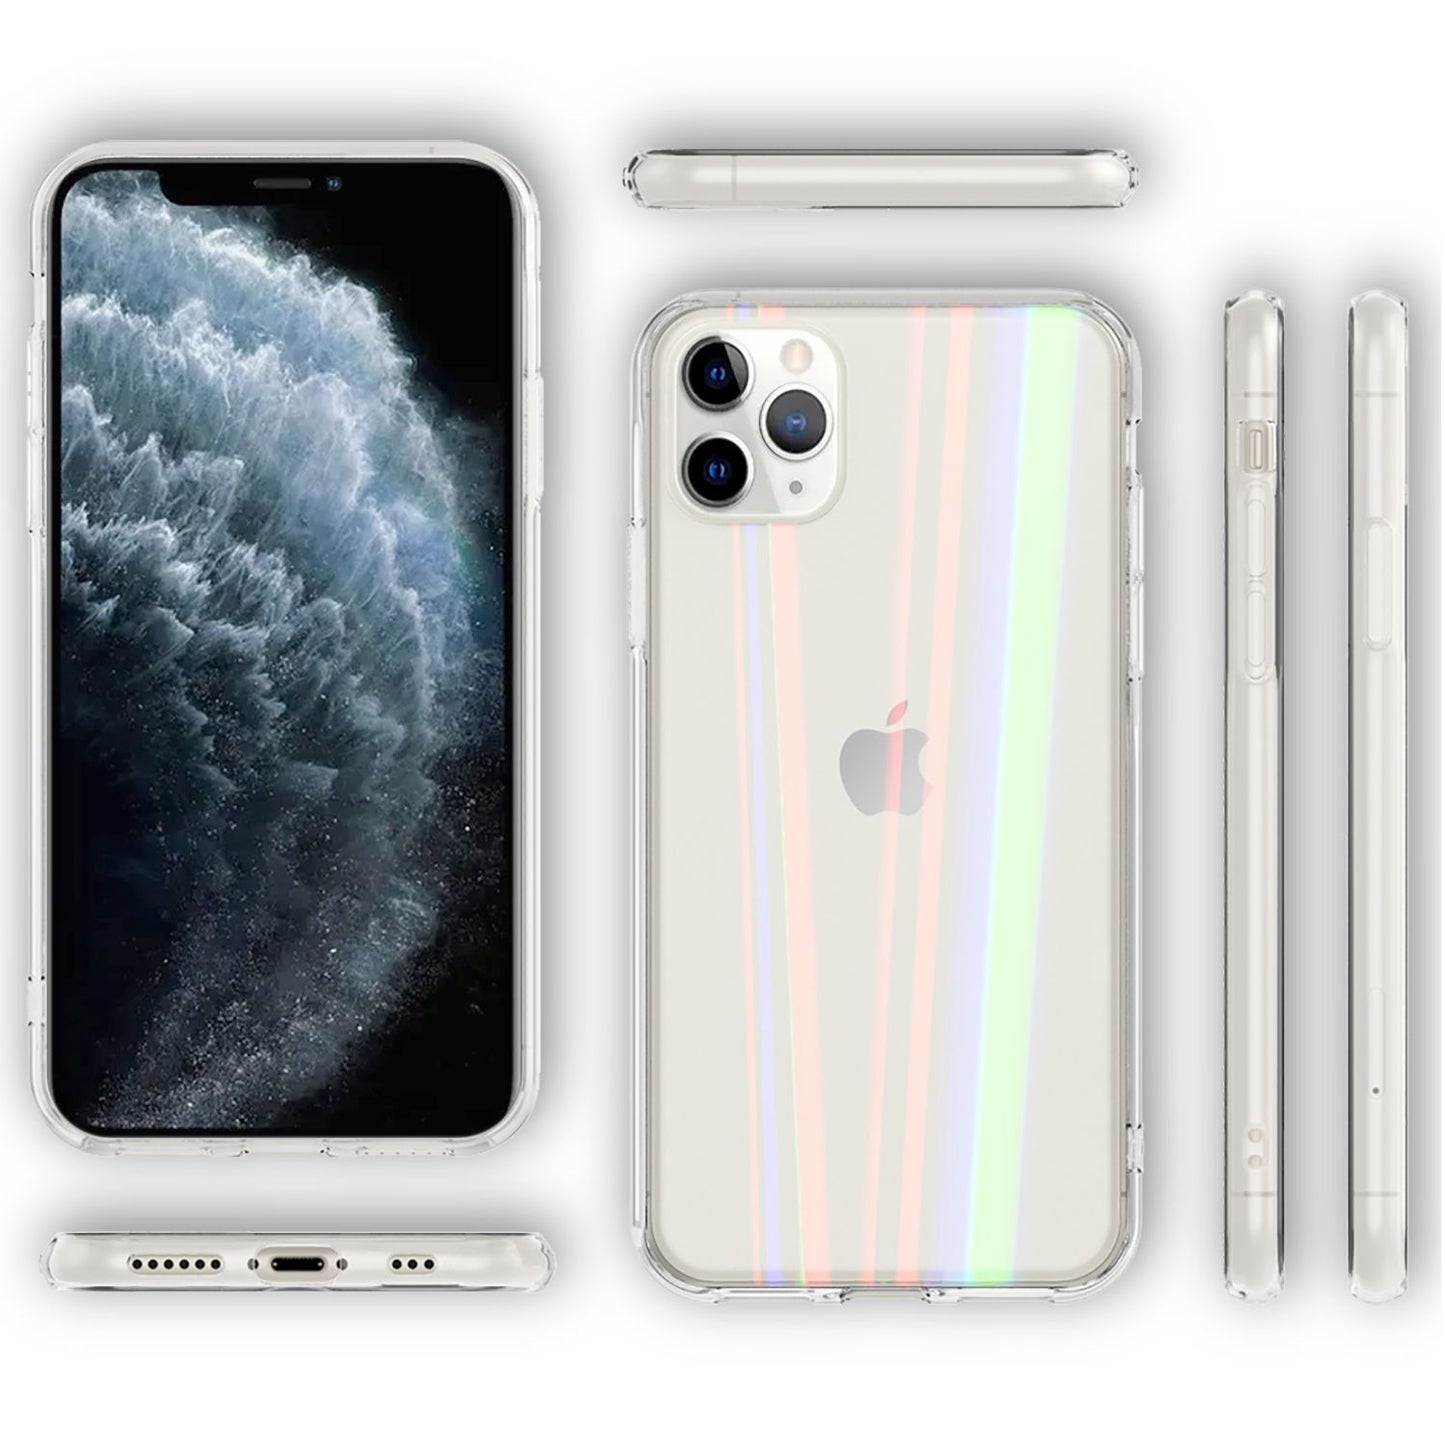 NALIA Hartglas Handy Hülle für iPhone 11 Pro, Regenbogen Case Cover Etui Bumper